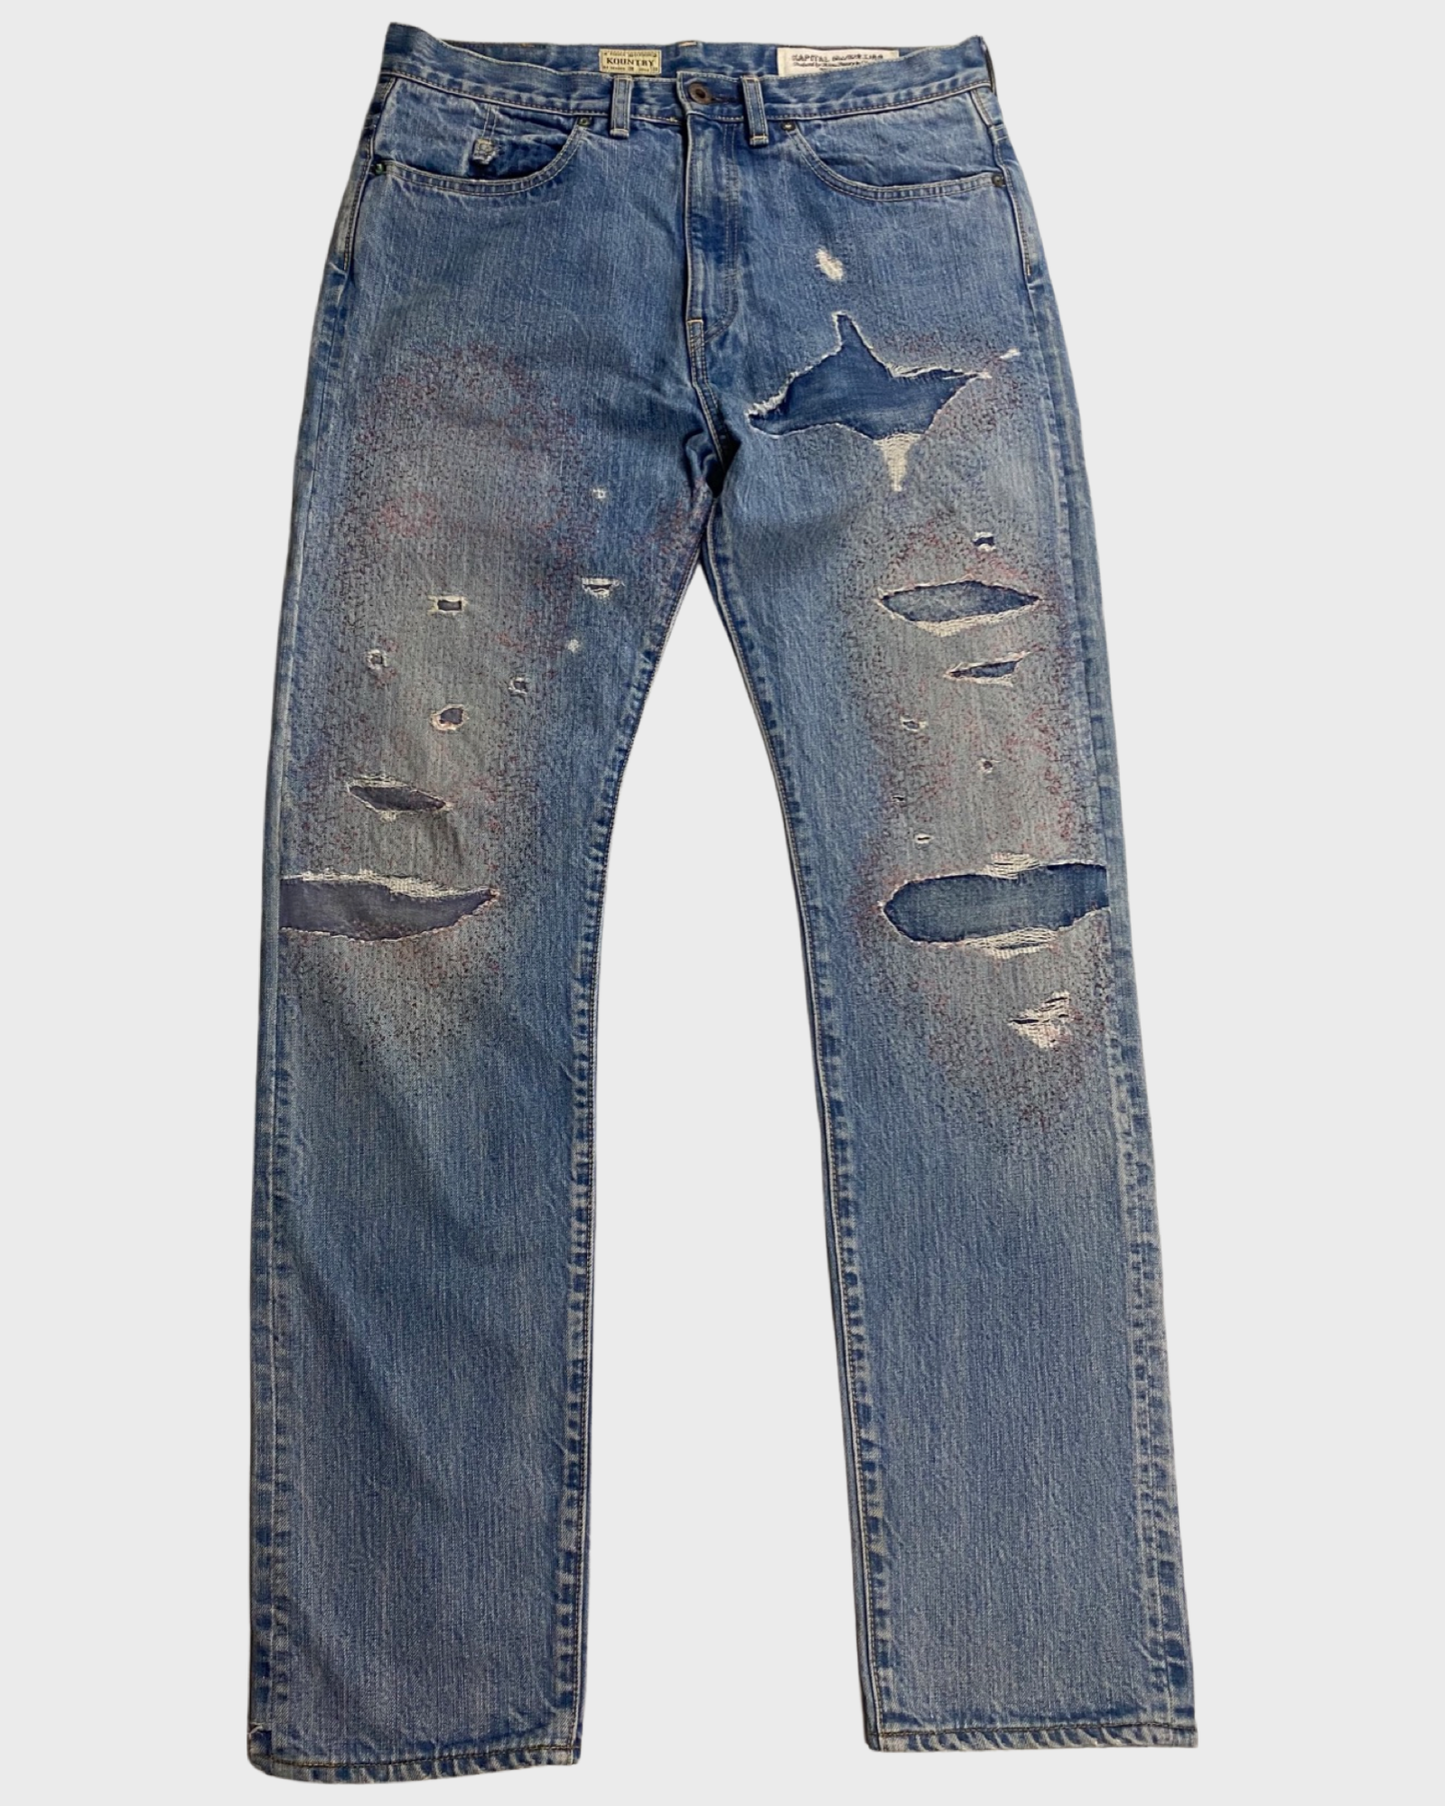 Kapital OG Shashiko Smiley Jeans SIZE:W34